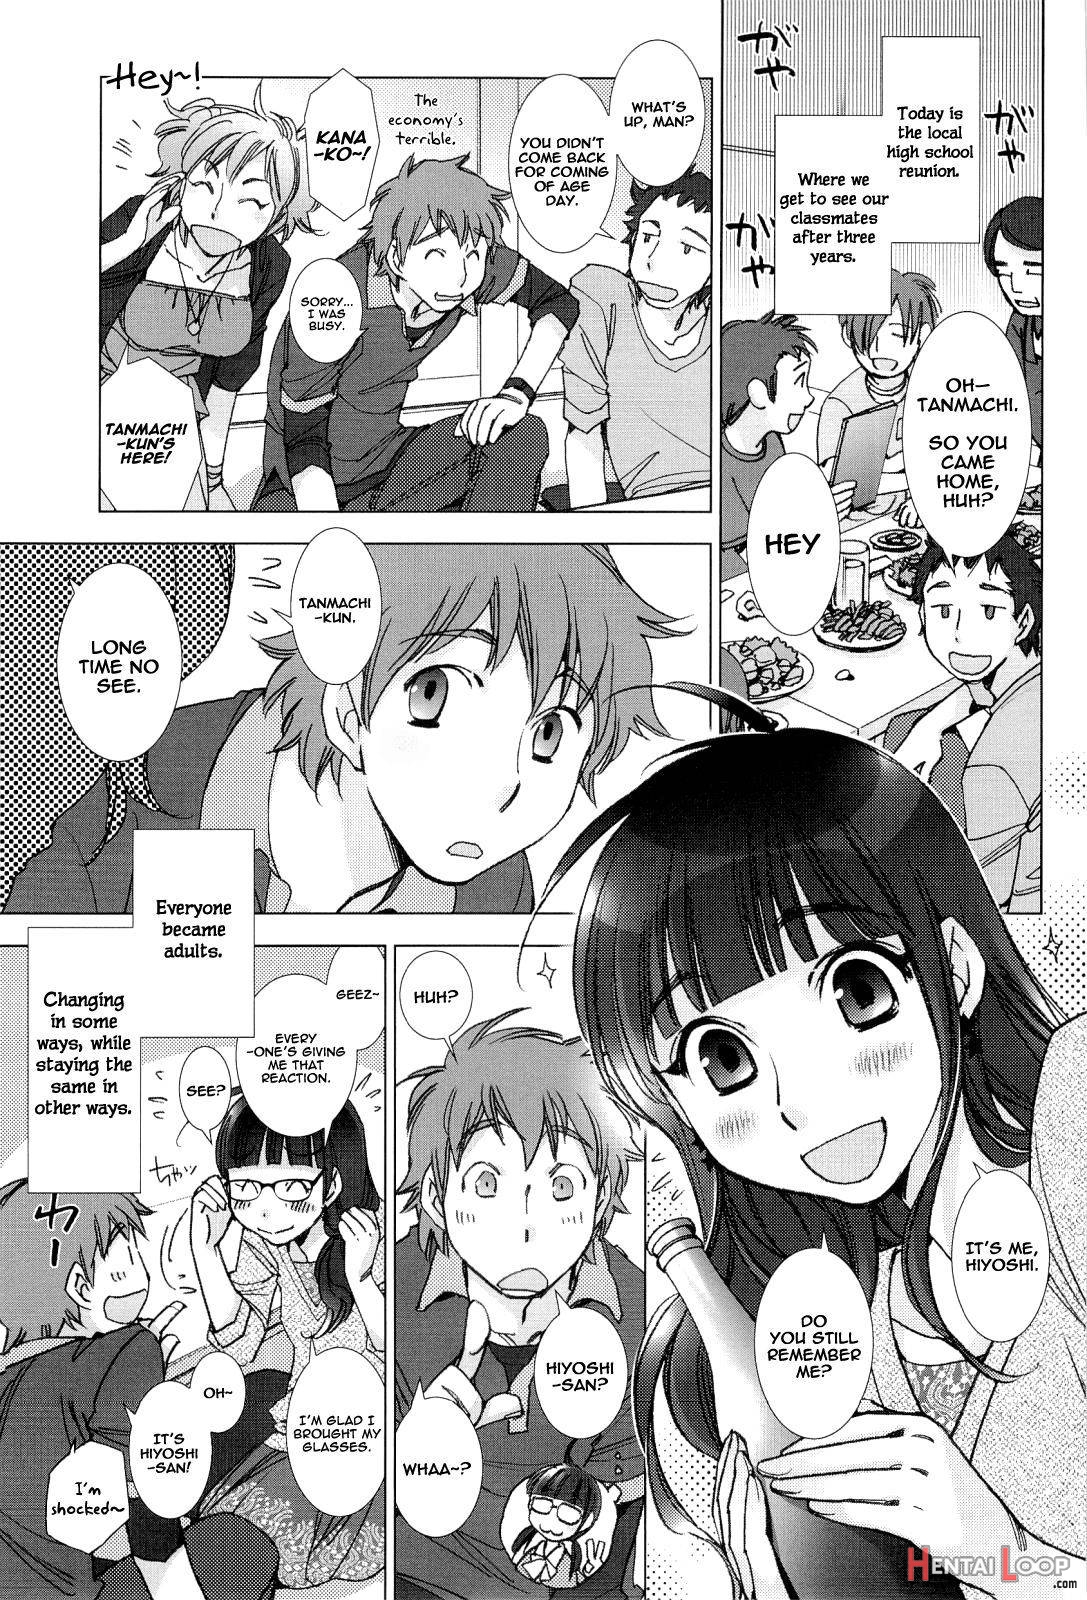 Tanmachi-kun and Hiyoshi-san page 2